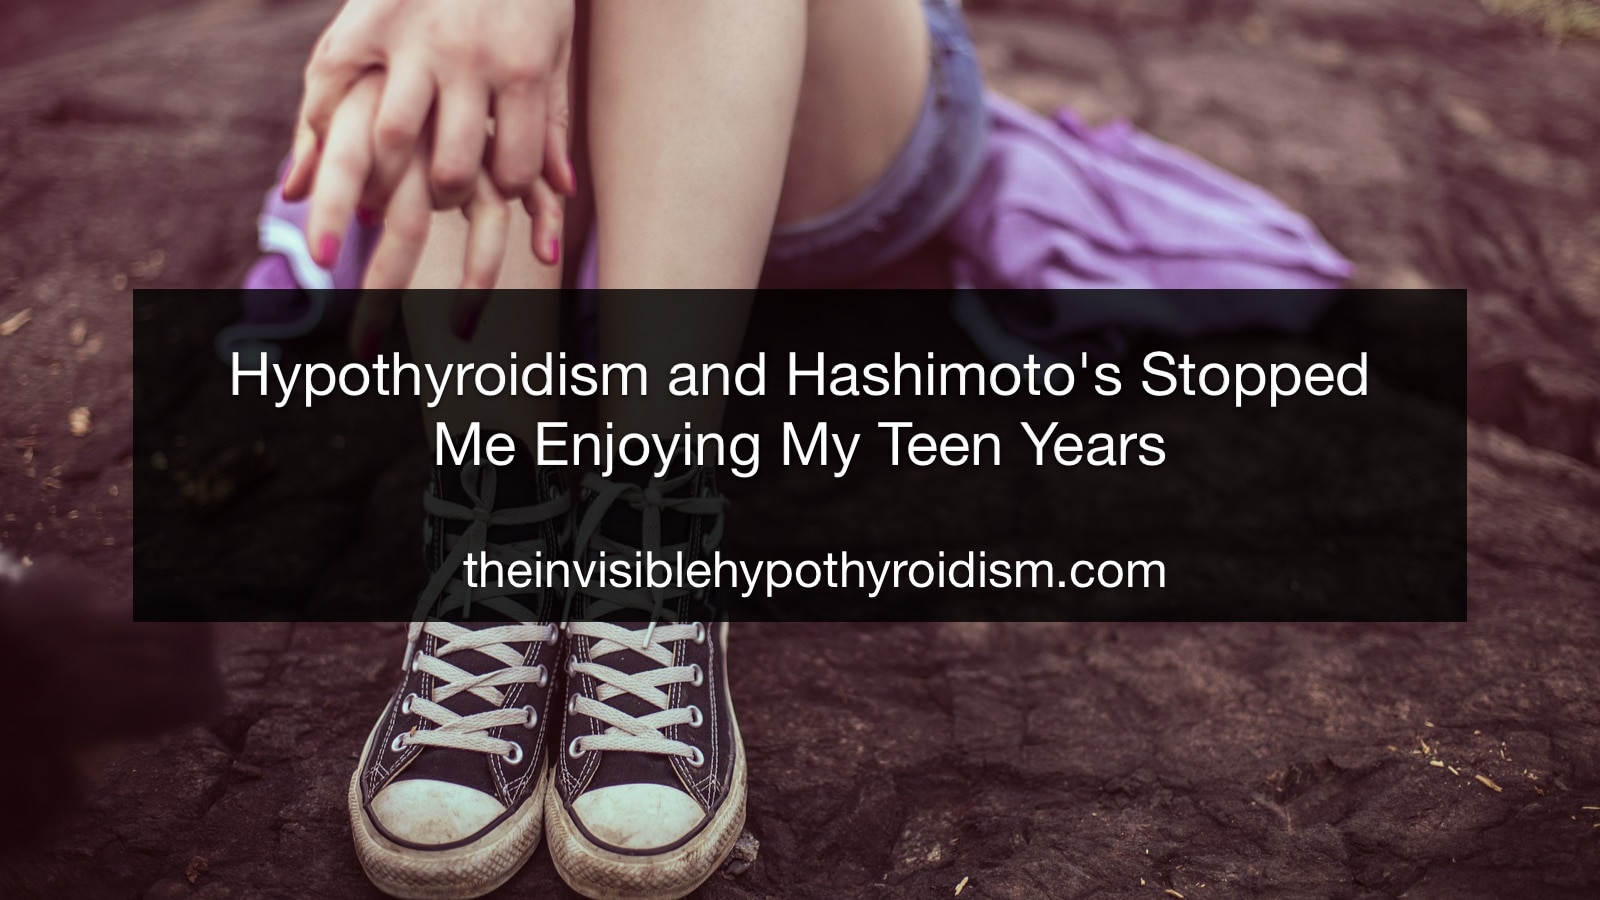 Hypothyroidism and Hashimoto's Stopped Me Enjoying My Teen Years